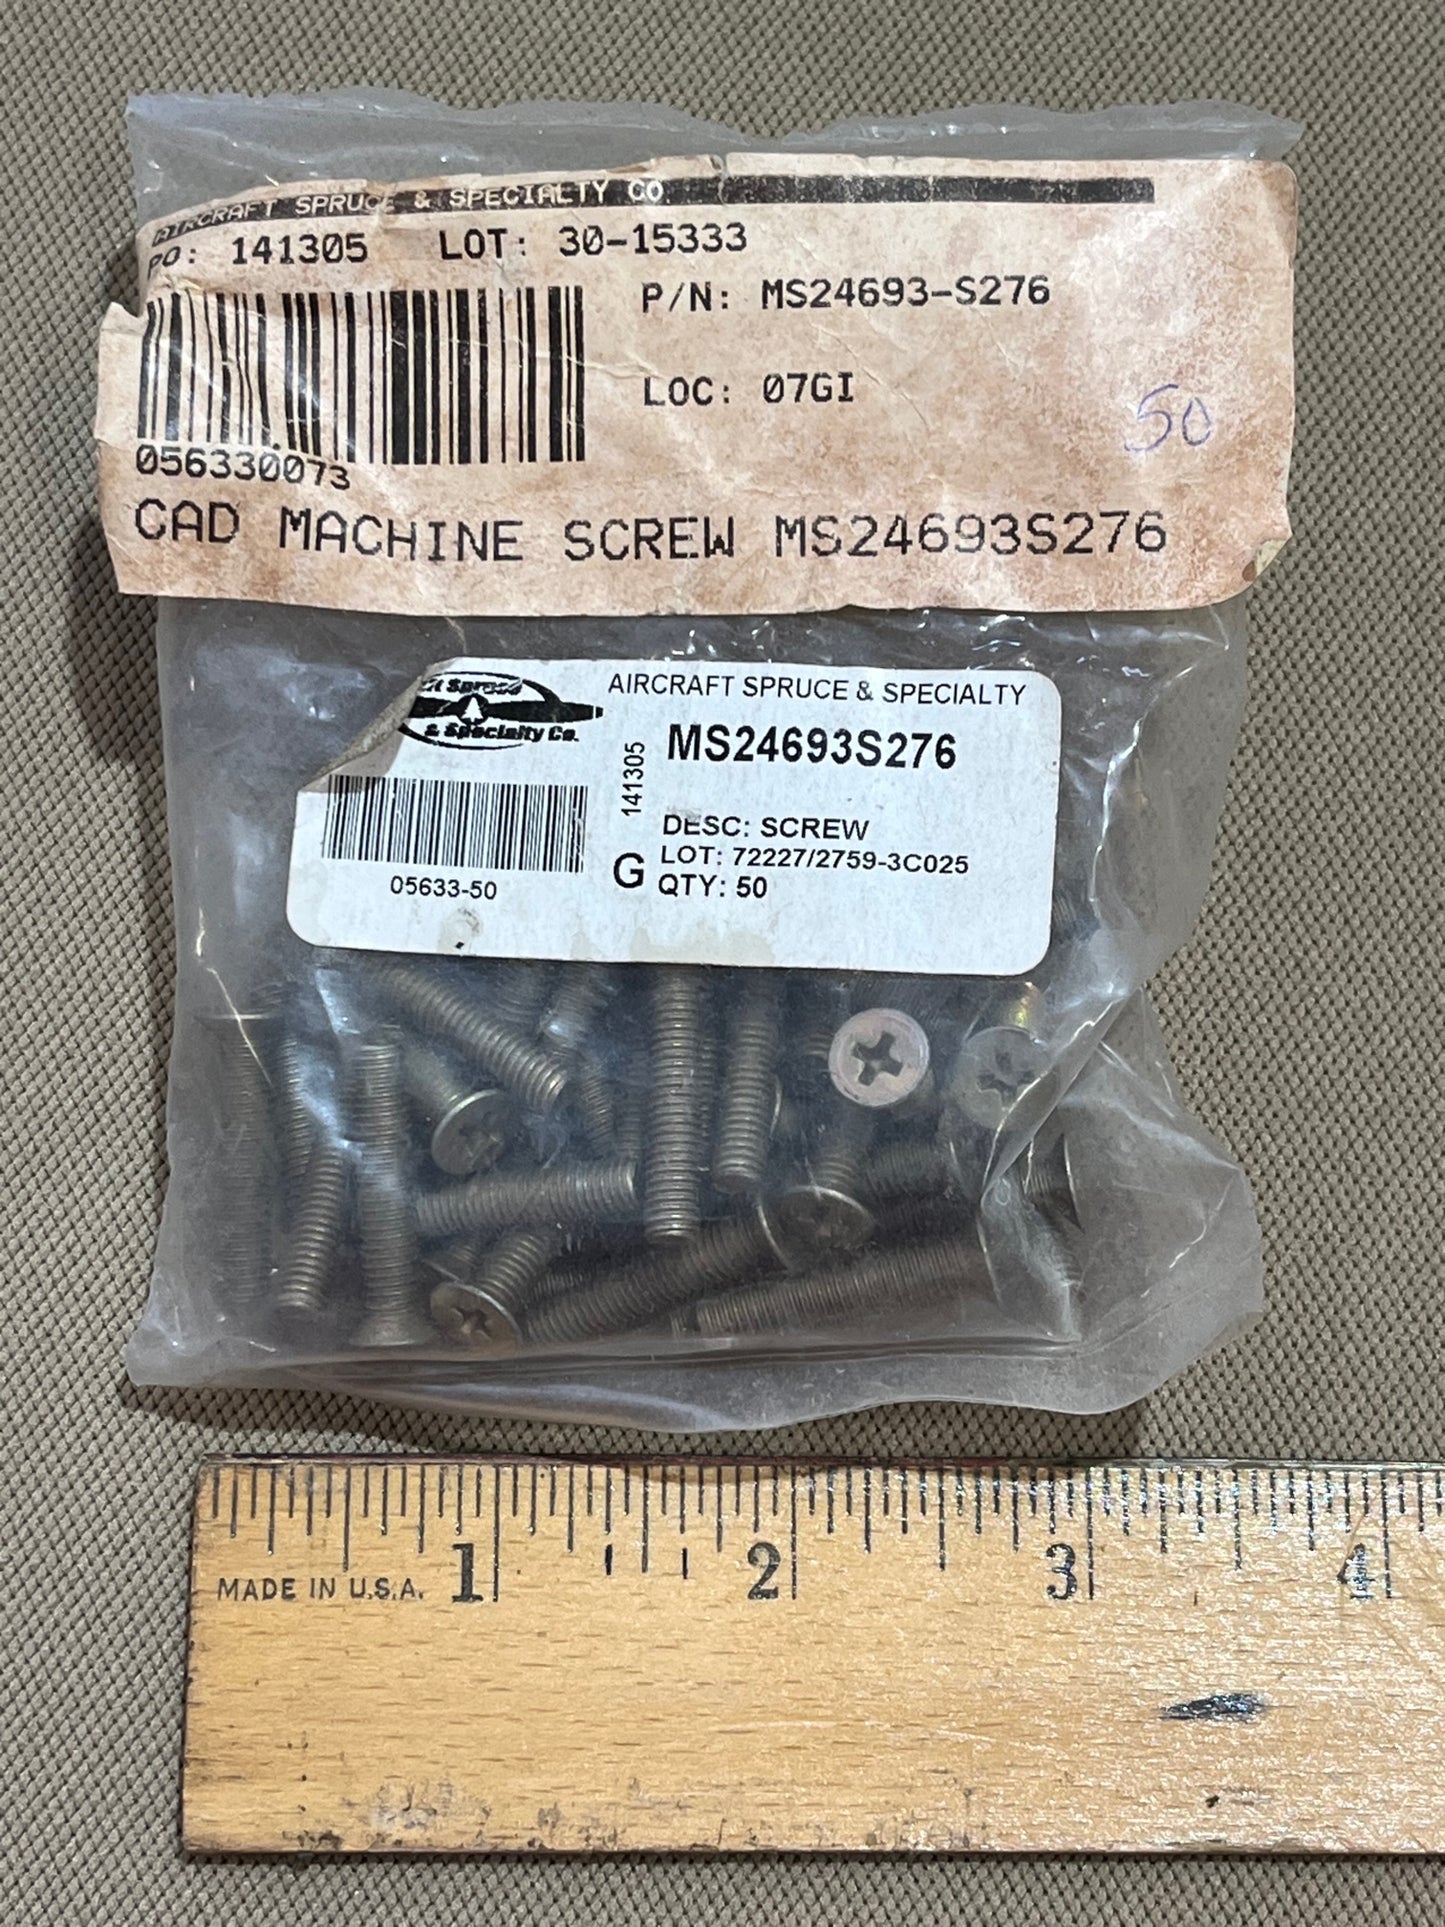 MS24693-S276 MACHINE SCREW